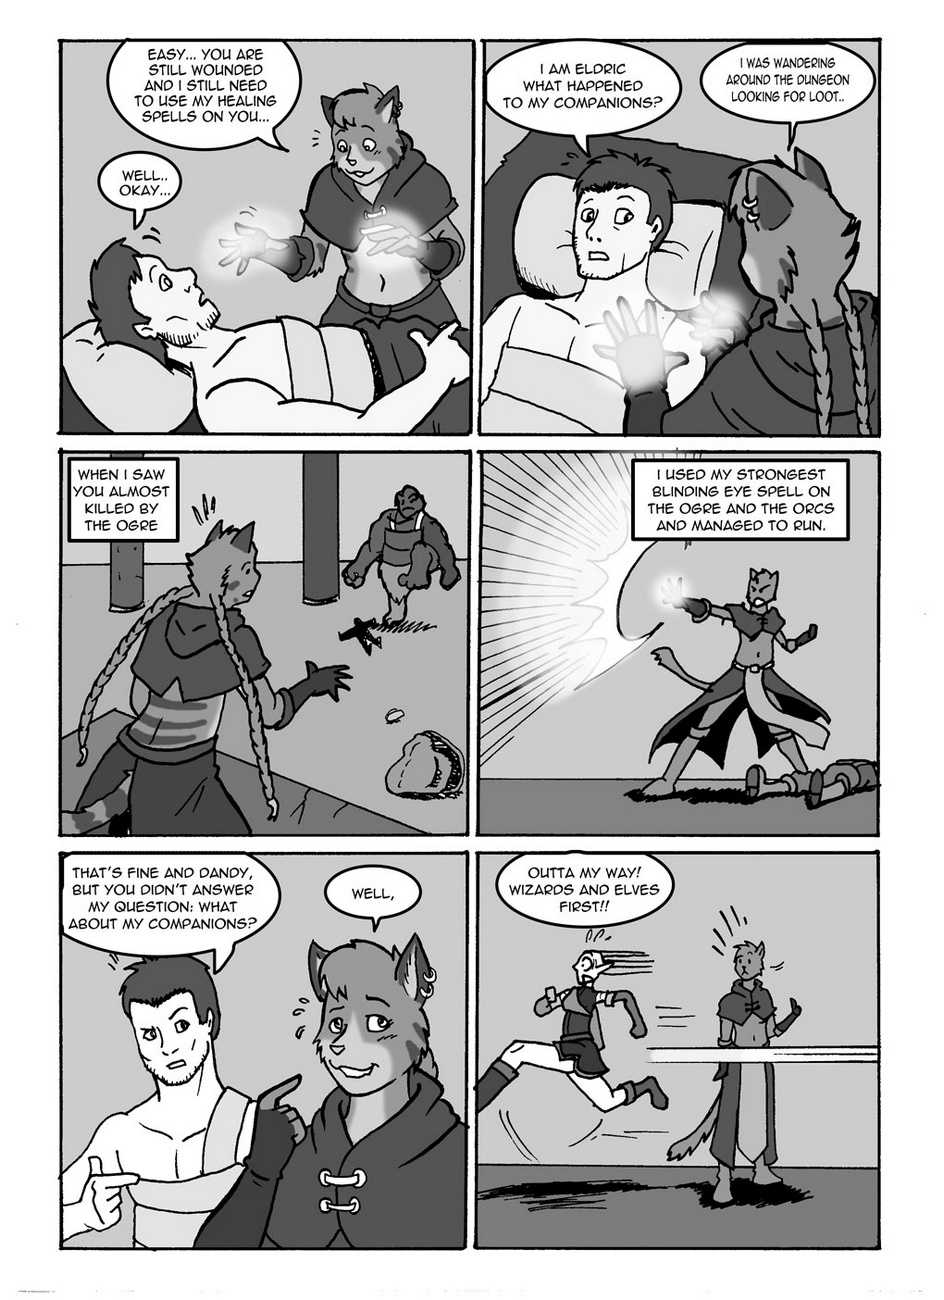 Random Encounters page 5